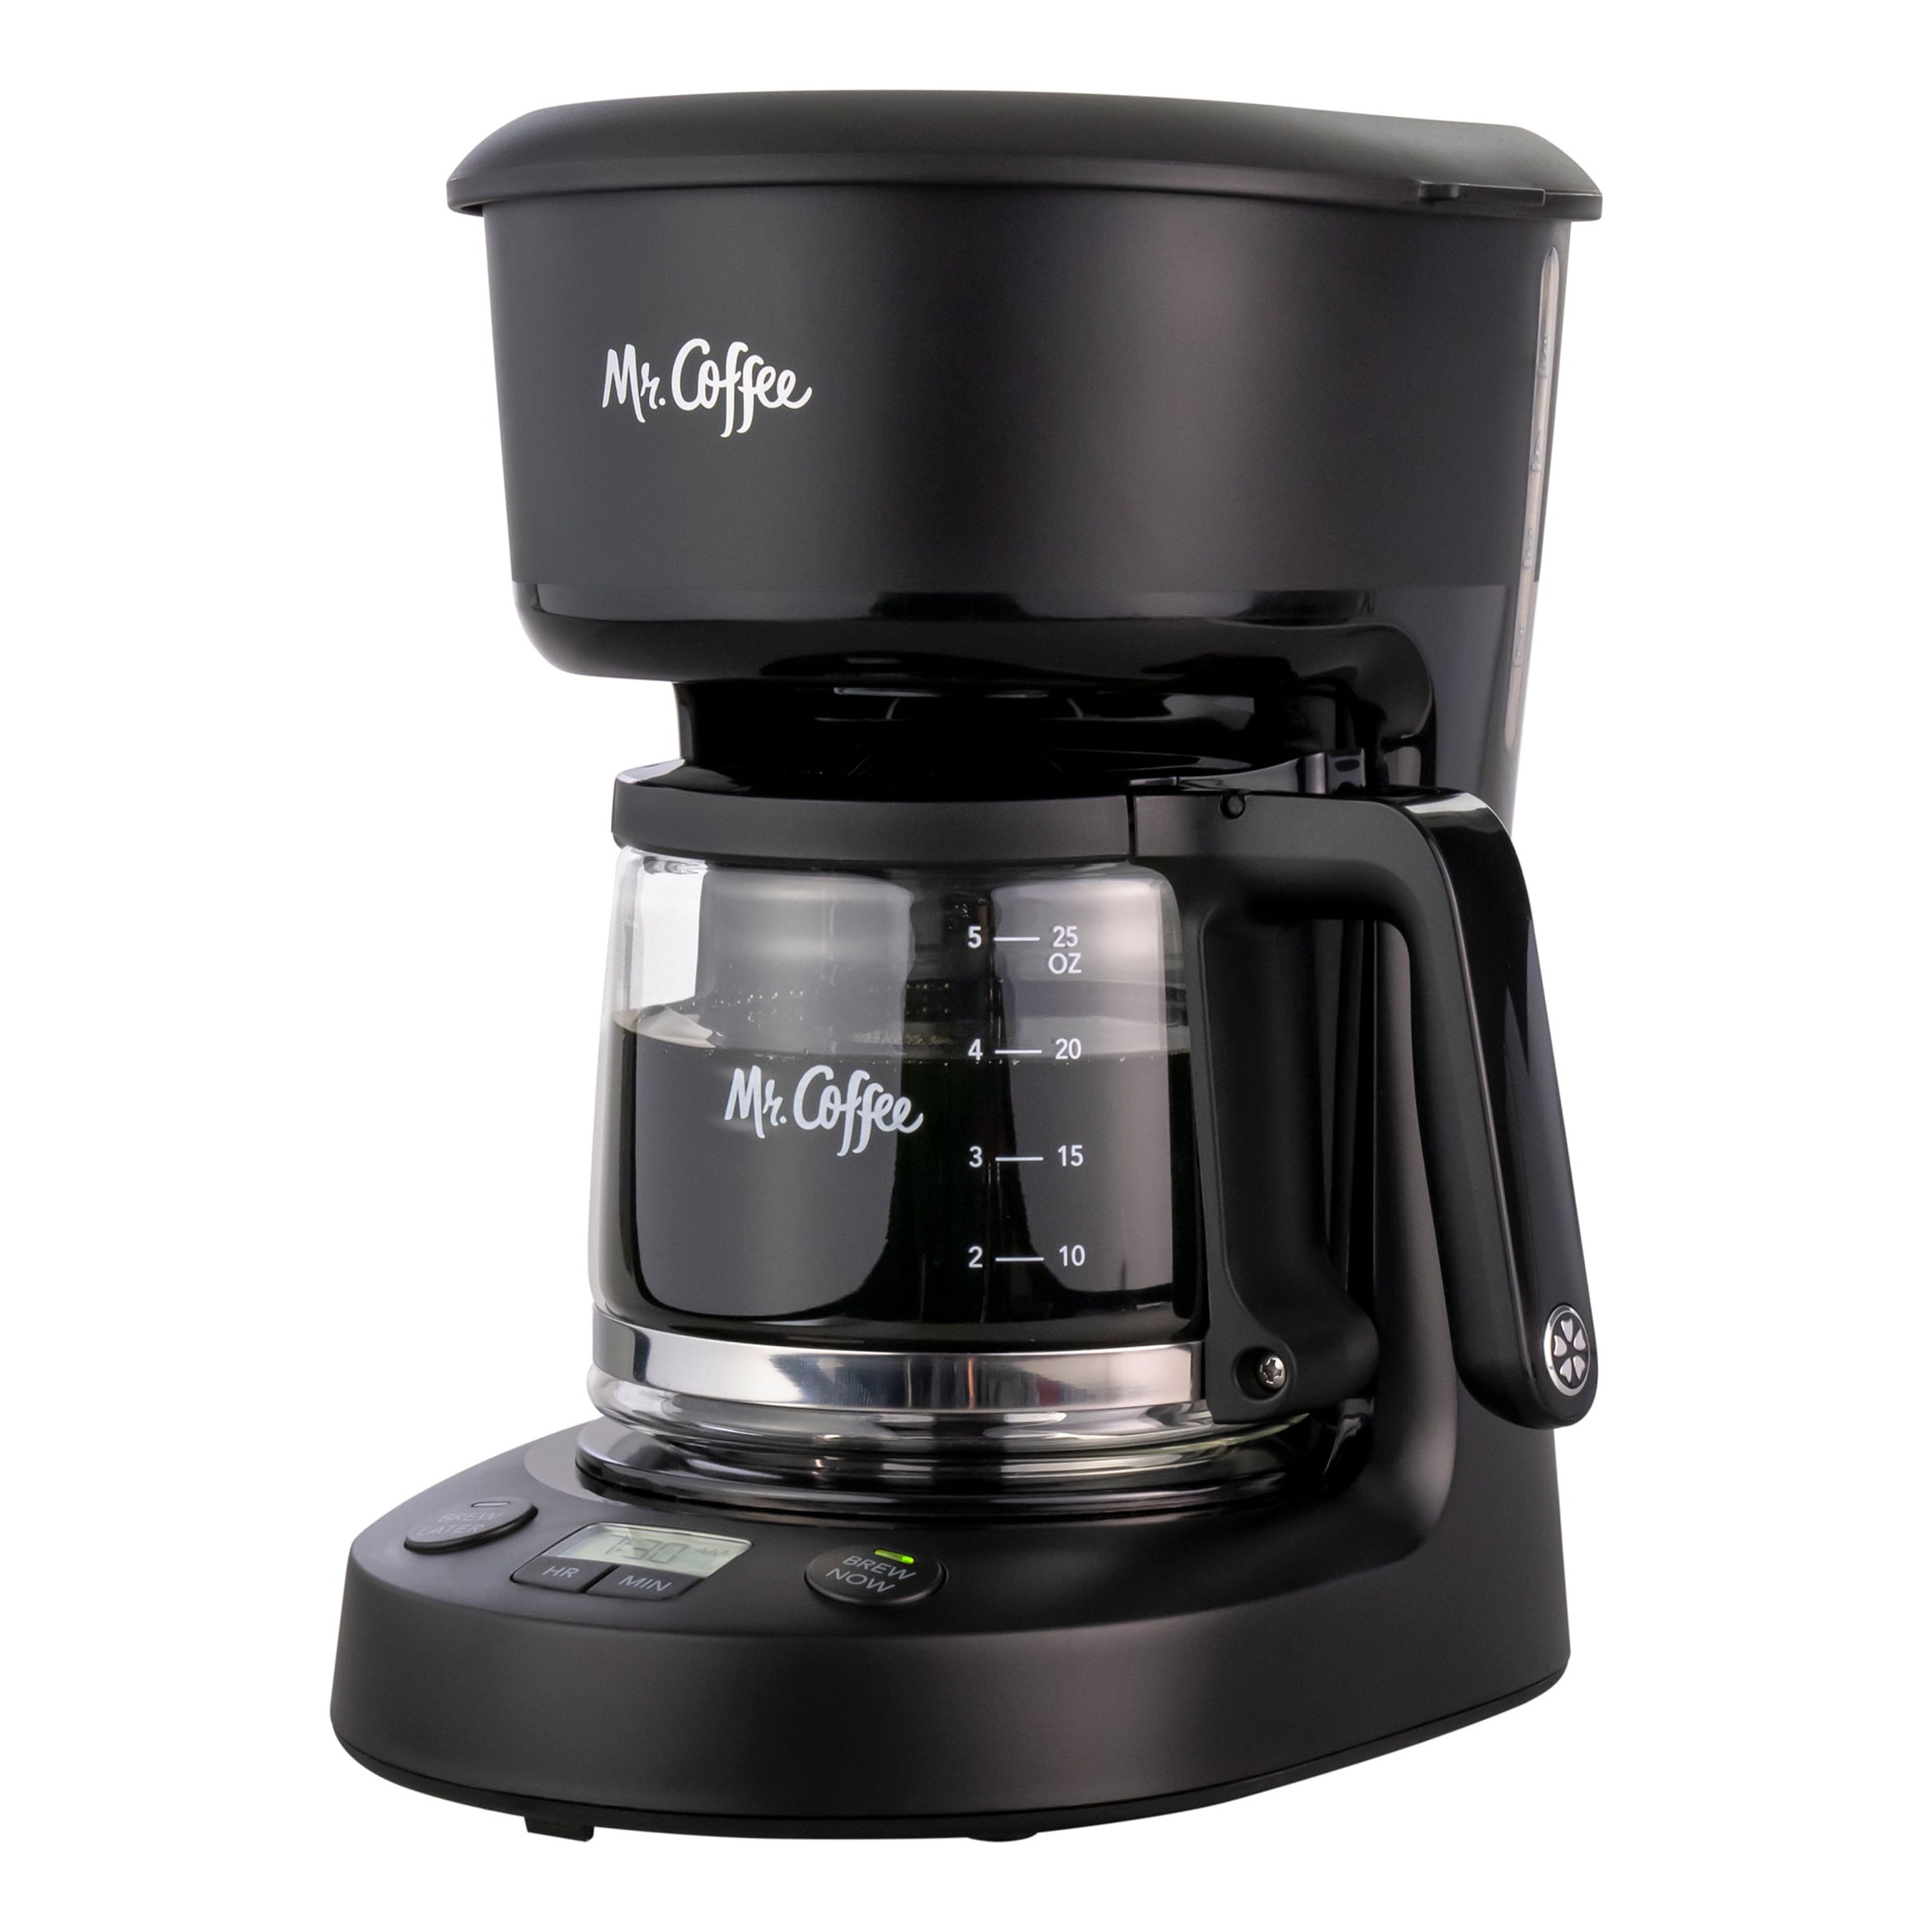 Mr. Coffee 5-Cup Programmable Coffee Maker, 25 oz. Mini Brew, Black - image 1 of 8